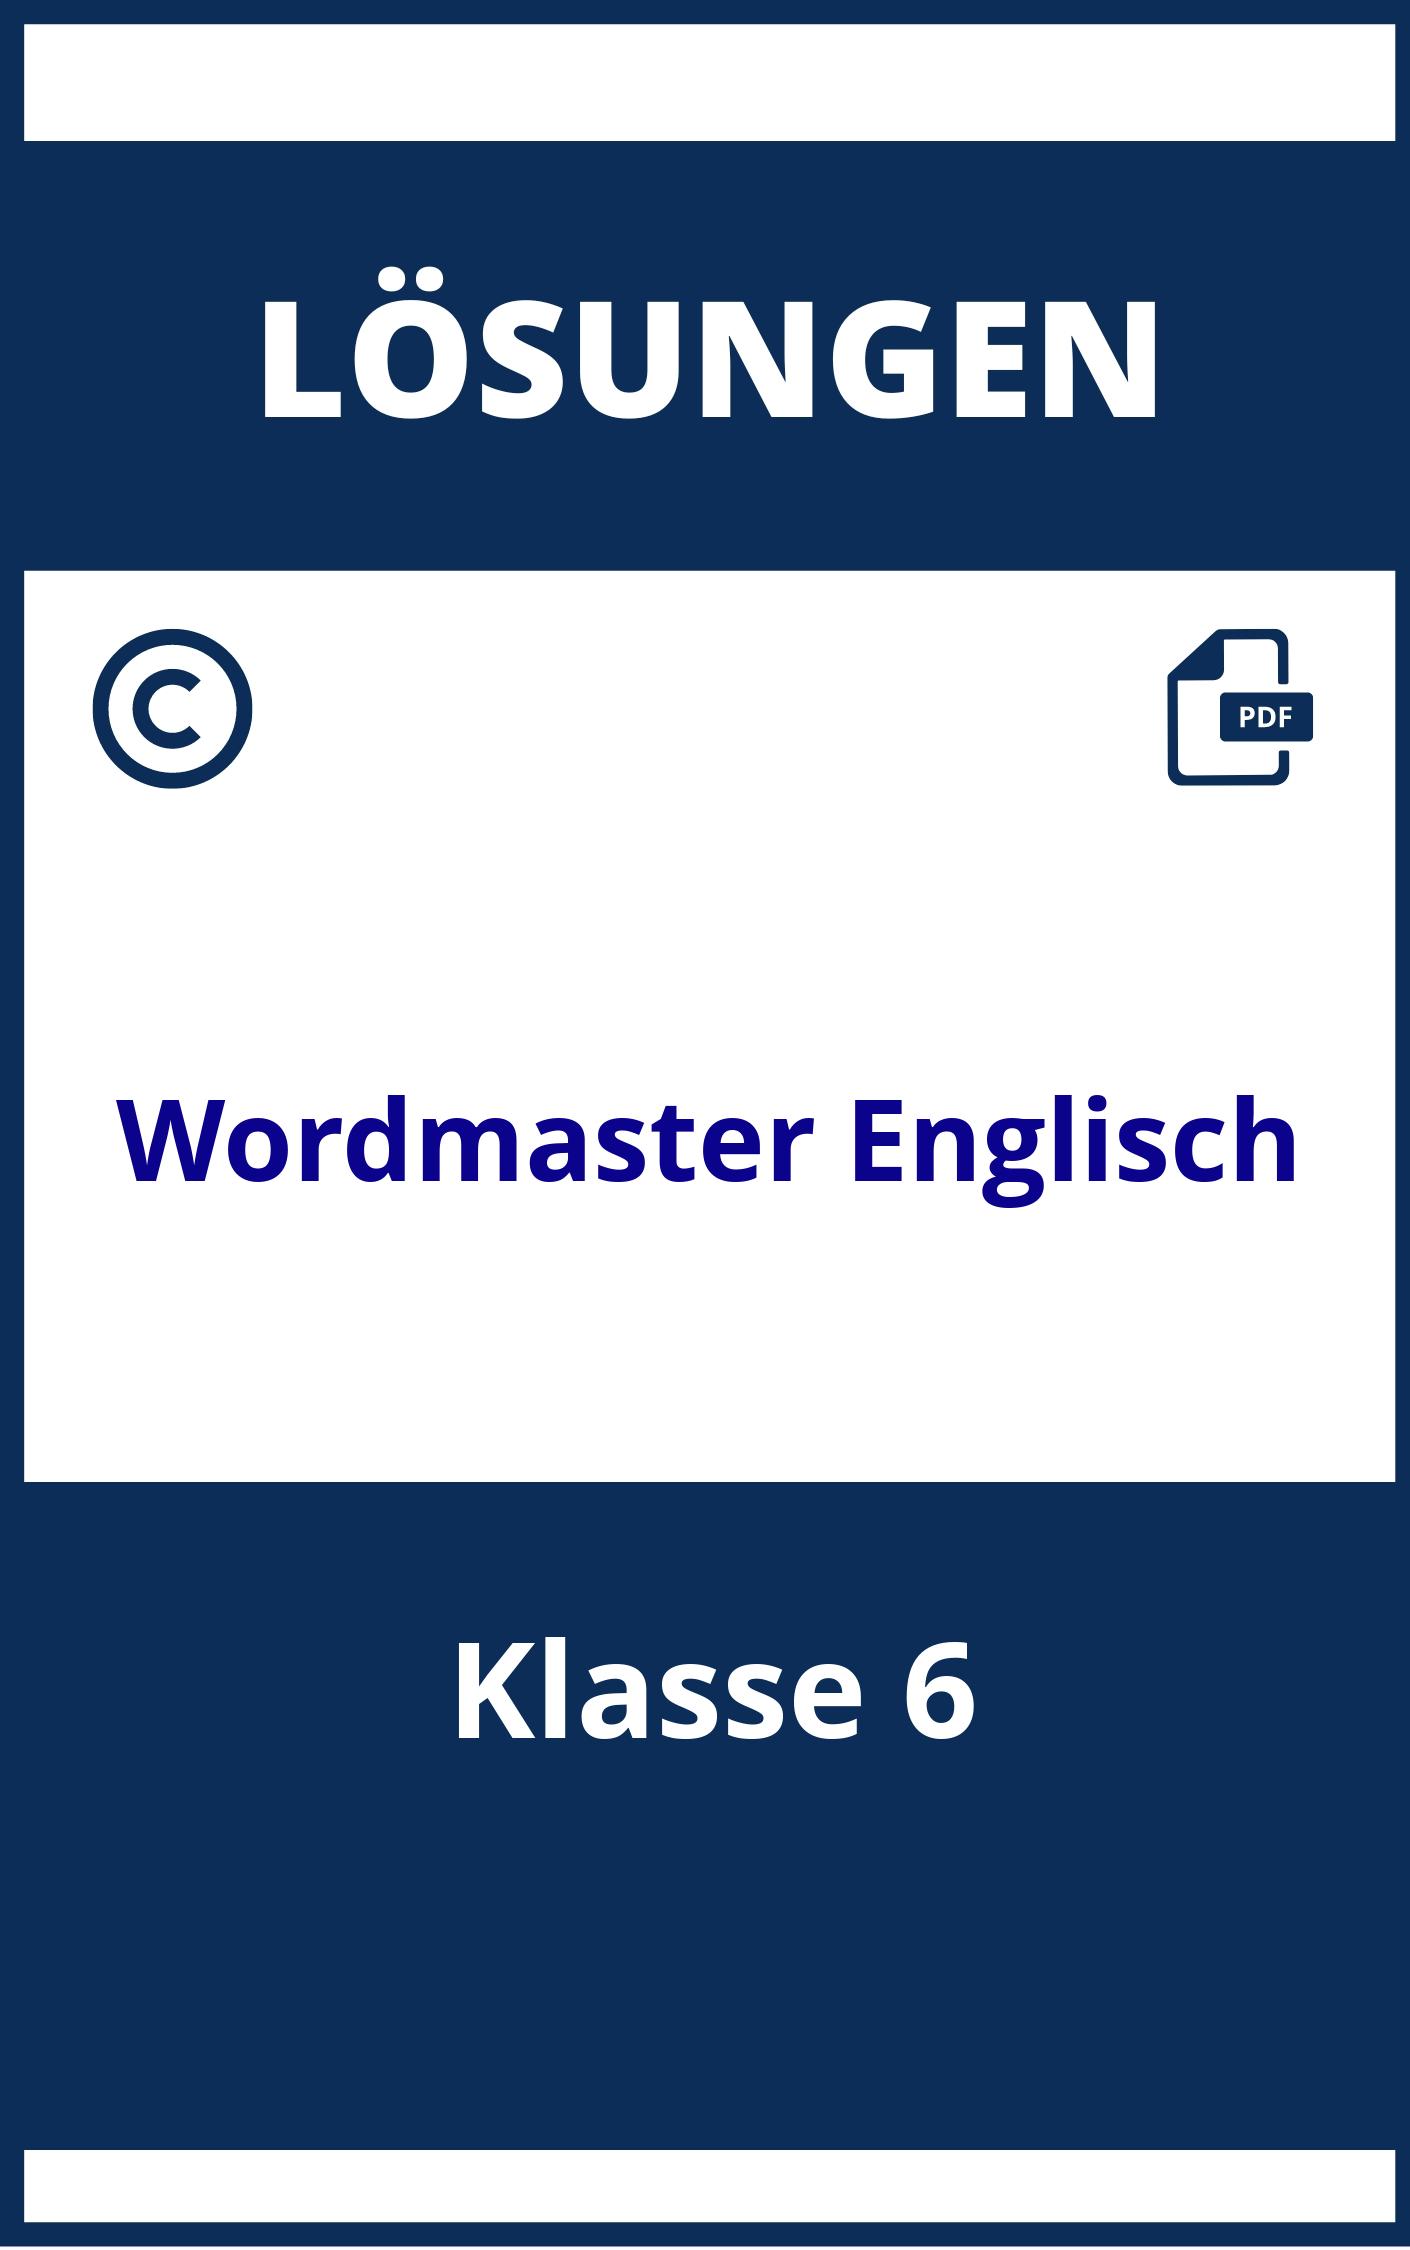 Wordmaster Englisch 6 Klasse Lösungen